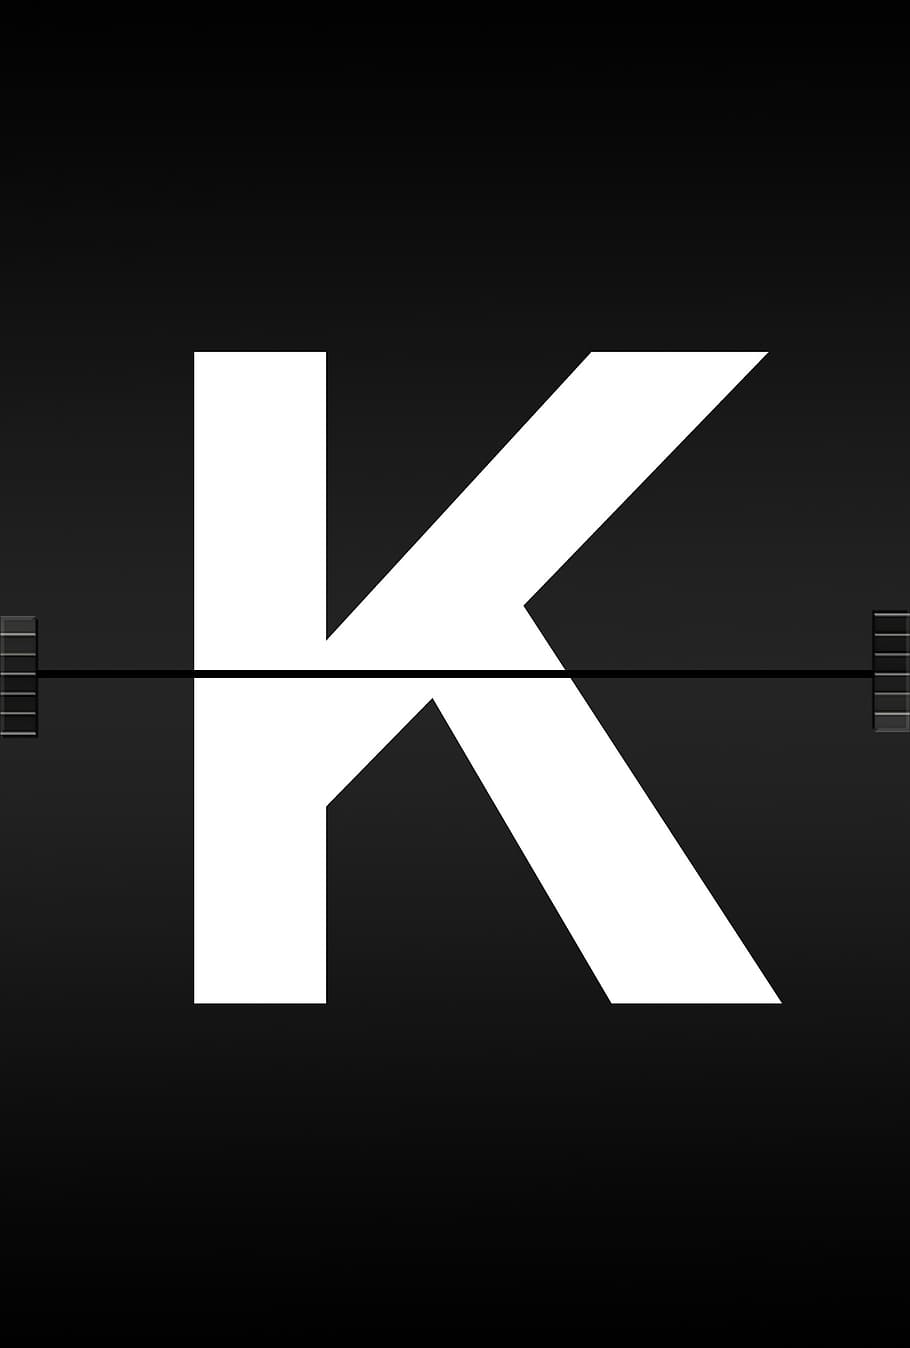 k logo, letters, abc, alphabet, journal font, airport, scoreboard, ad, railway station, board